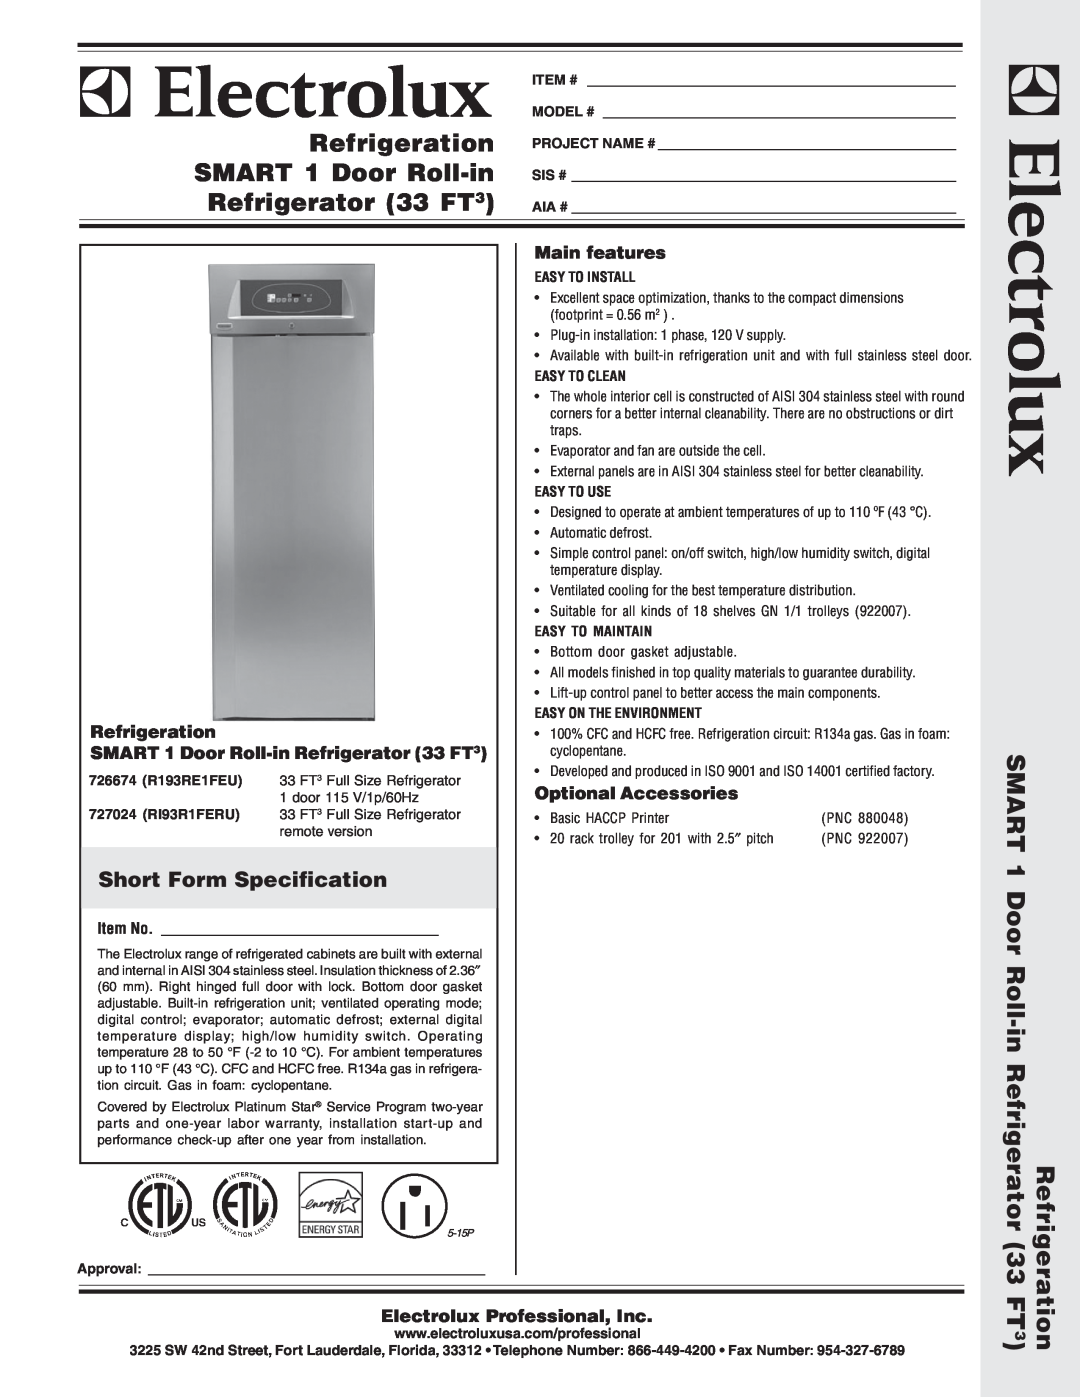 Electrolux 727024 warranty Short Form Specification, Main features, Refrigeration, SMART 1 Door Roll-in Refrigerator 33 FT 